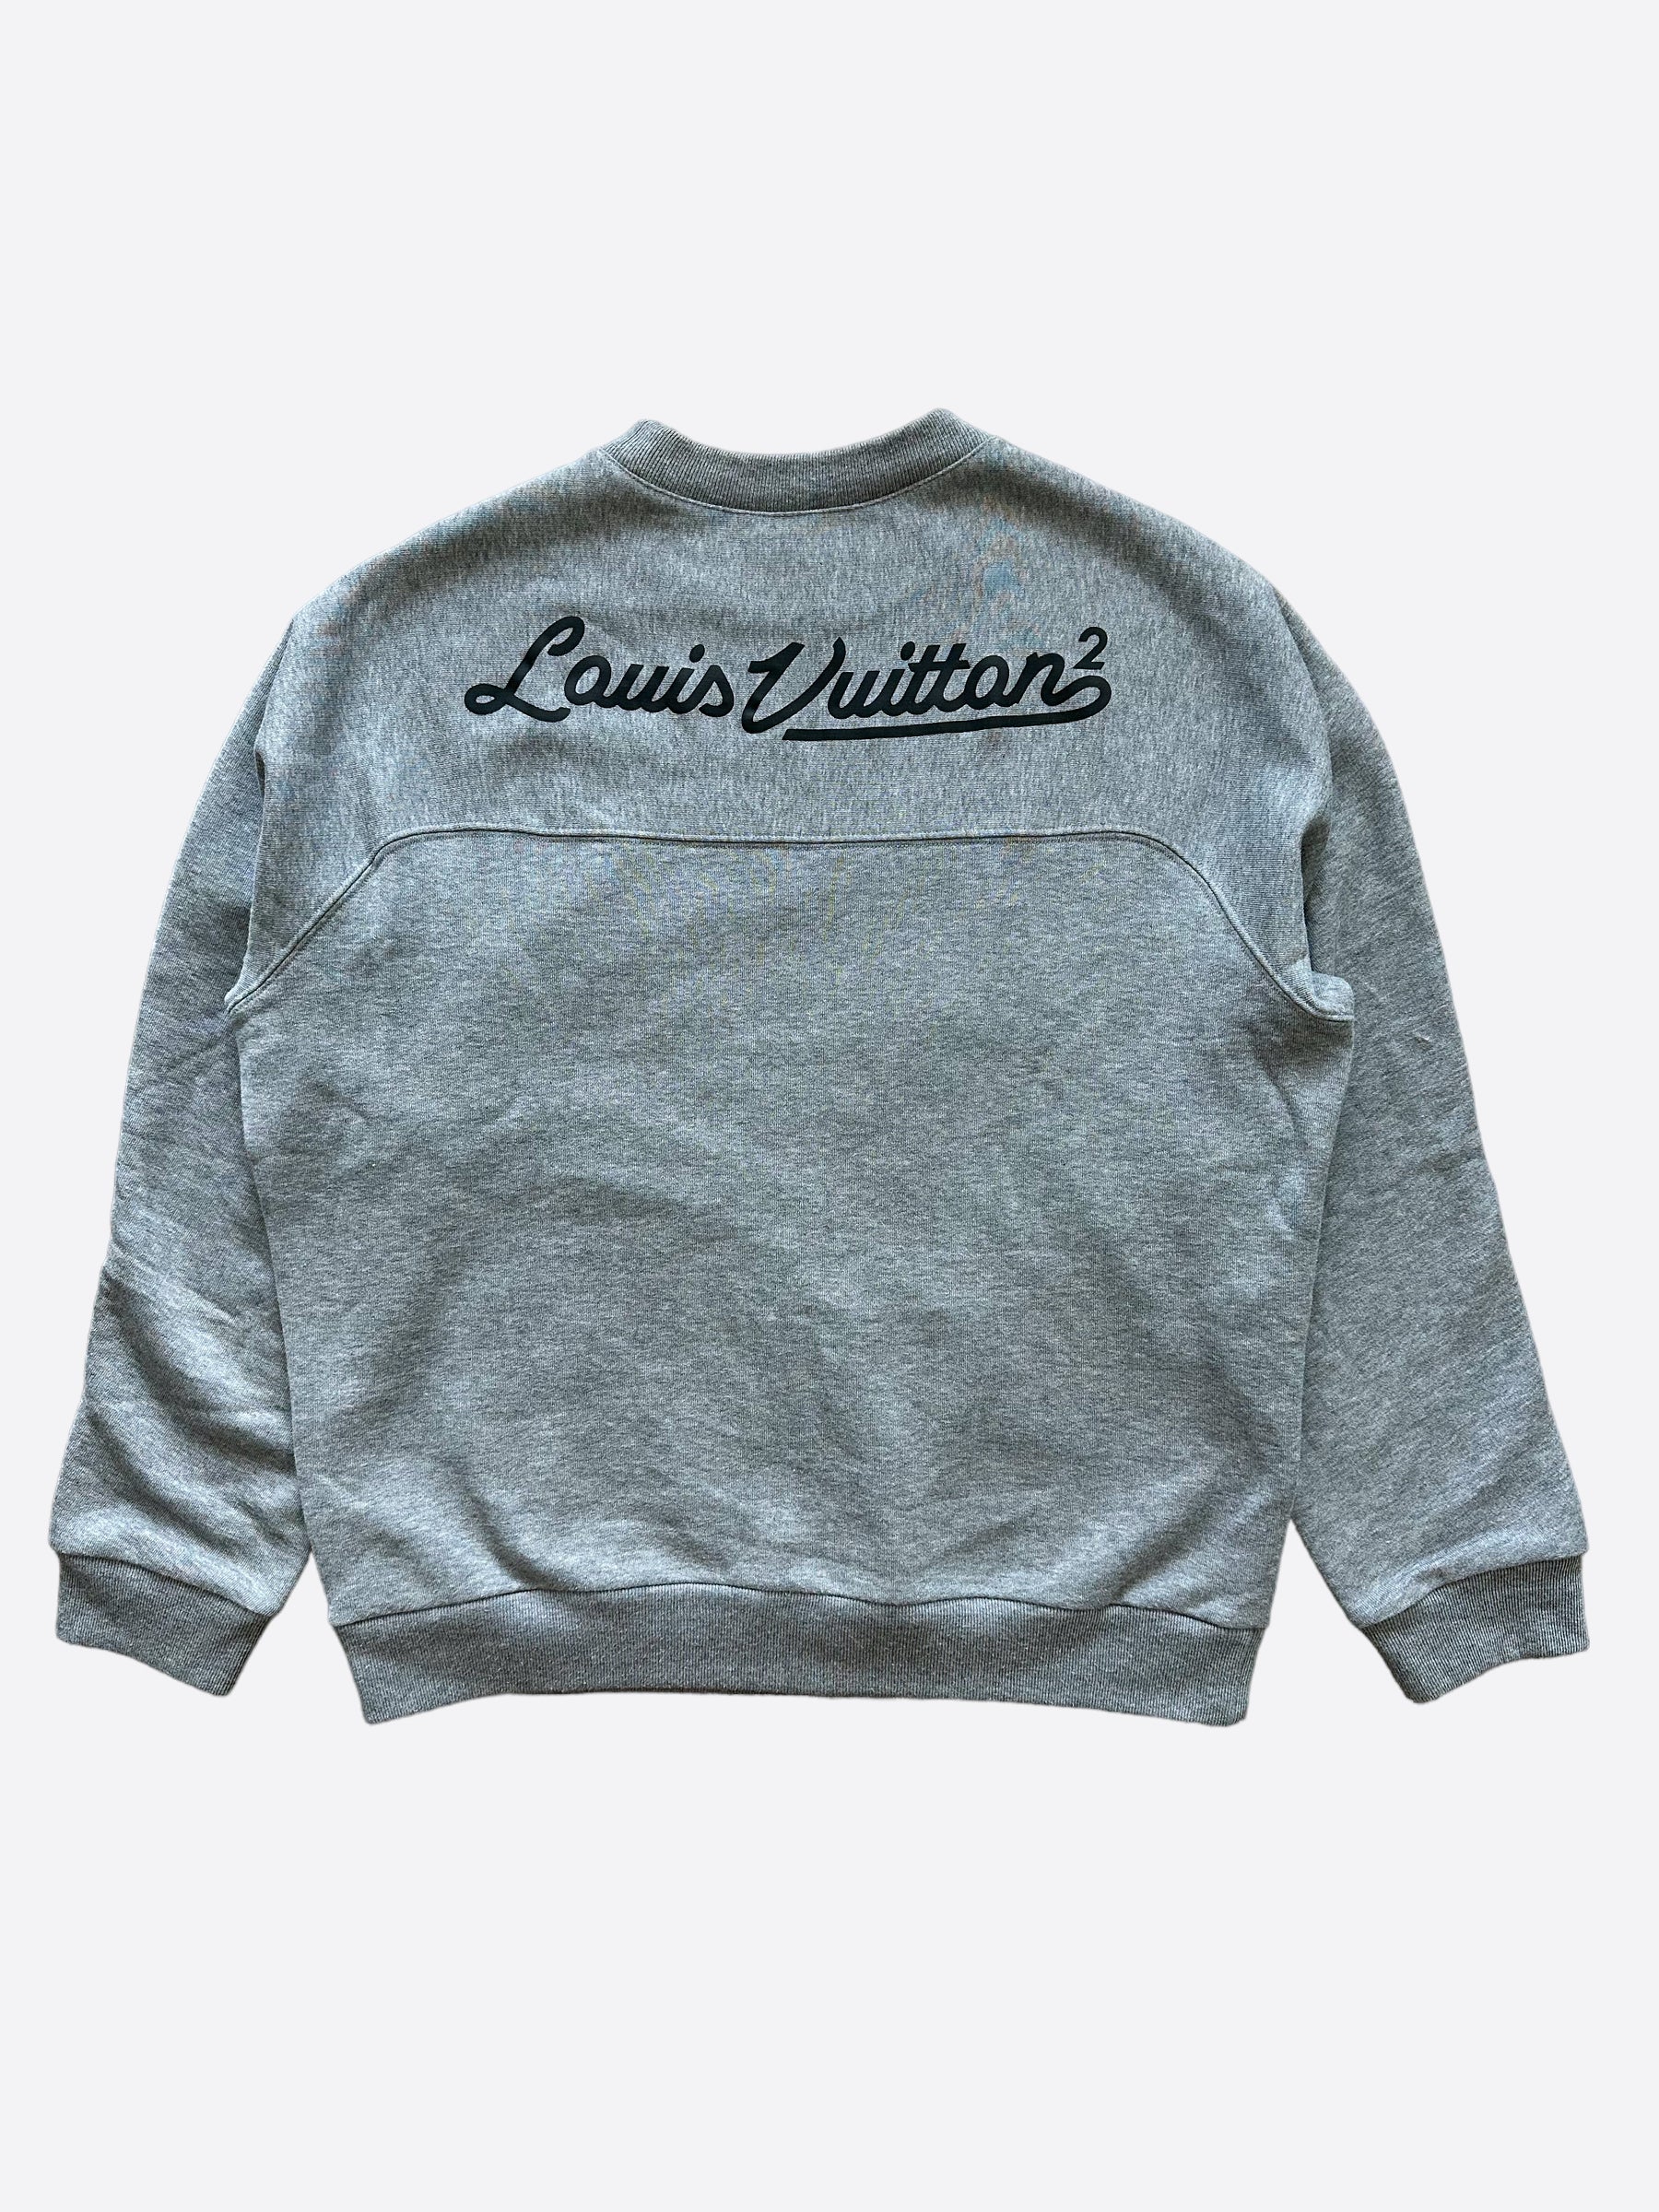 Louis Vuitton x Nigo Printed Heart Sweatshirt Retail vs Cool by